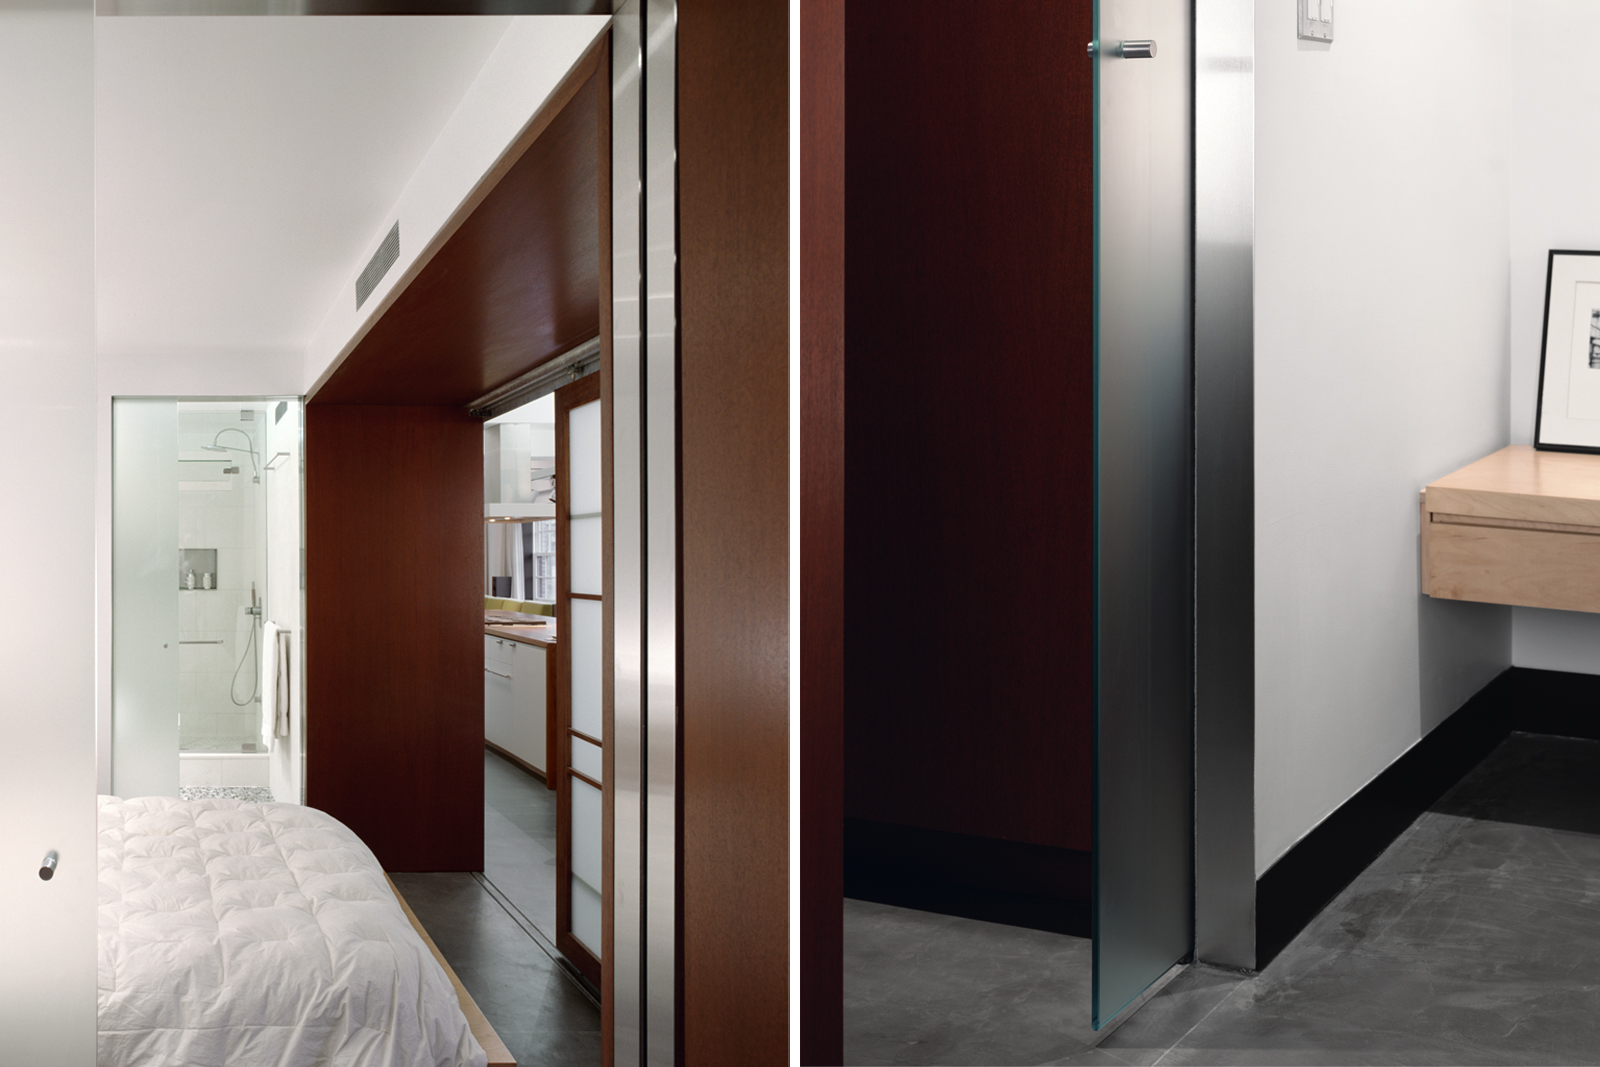 12-res4-resolution-4-architecture-modern-apartment-residential-nychay-loft-interior-master-bedroom-door-details.jpg